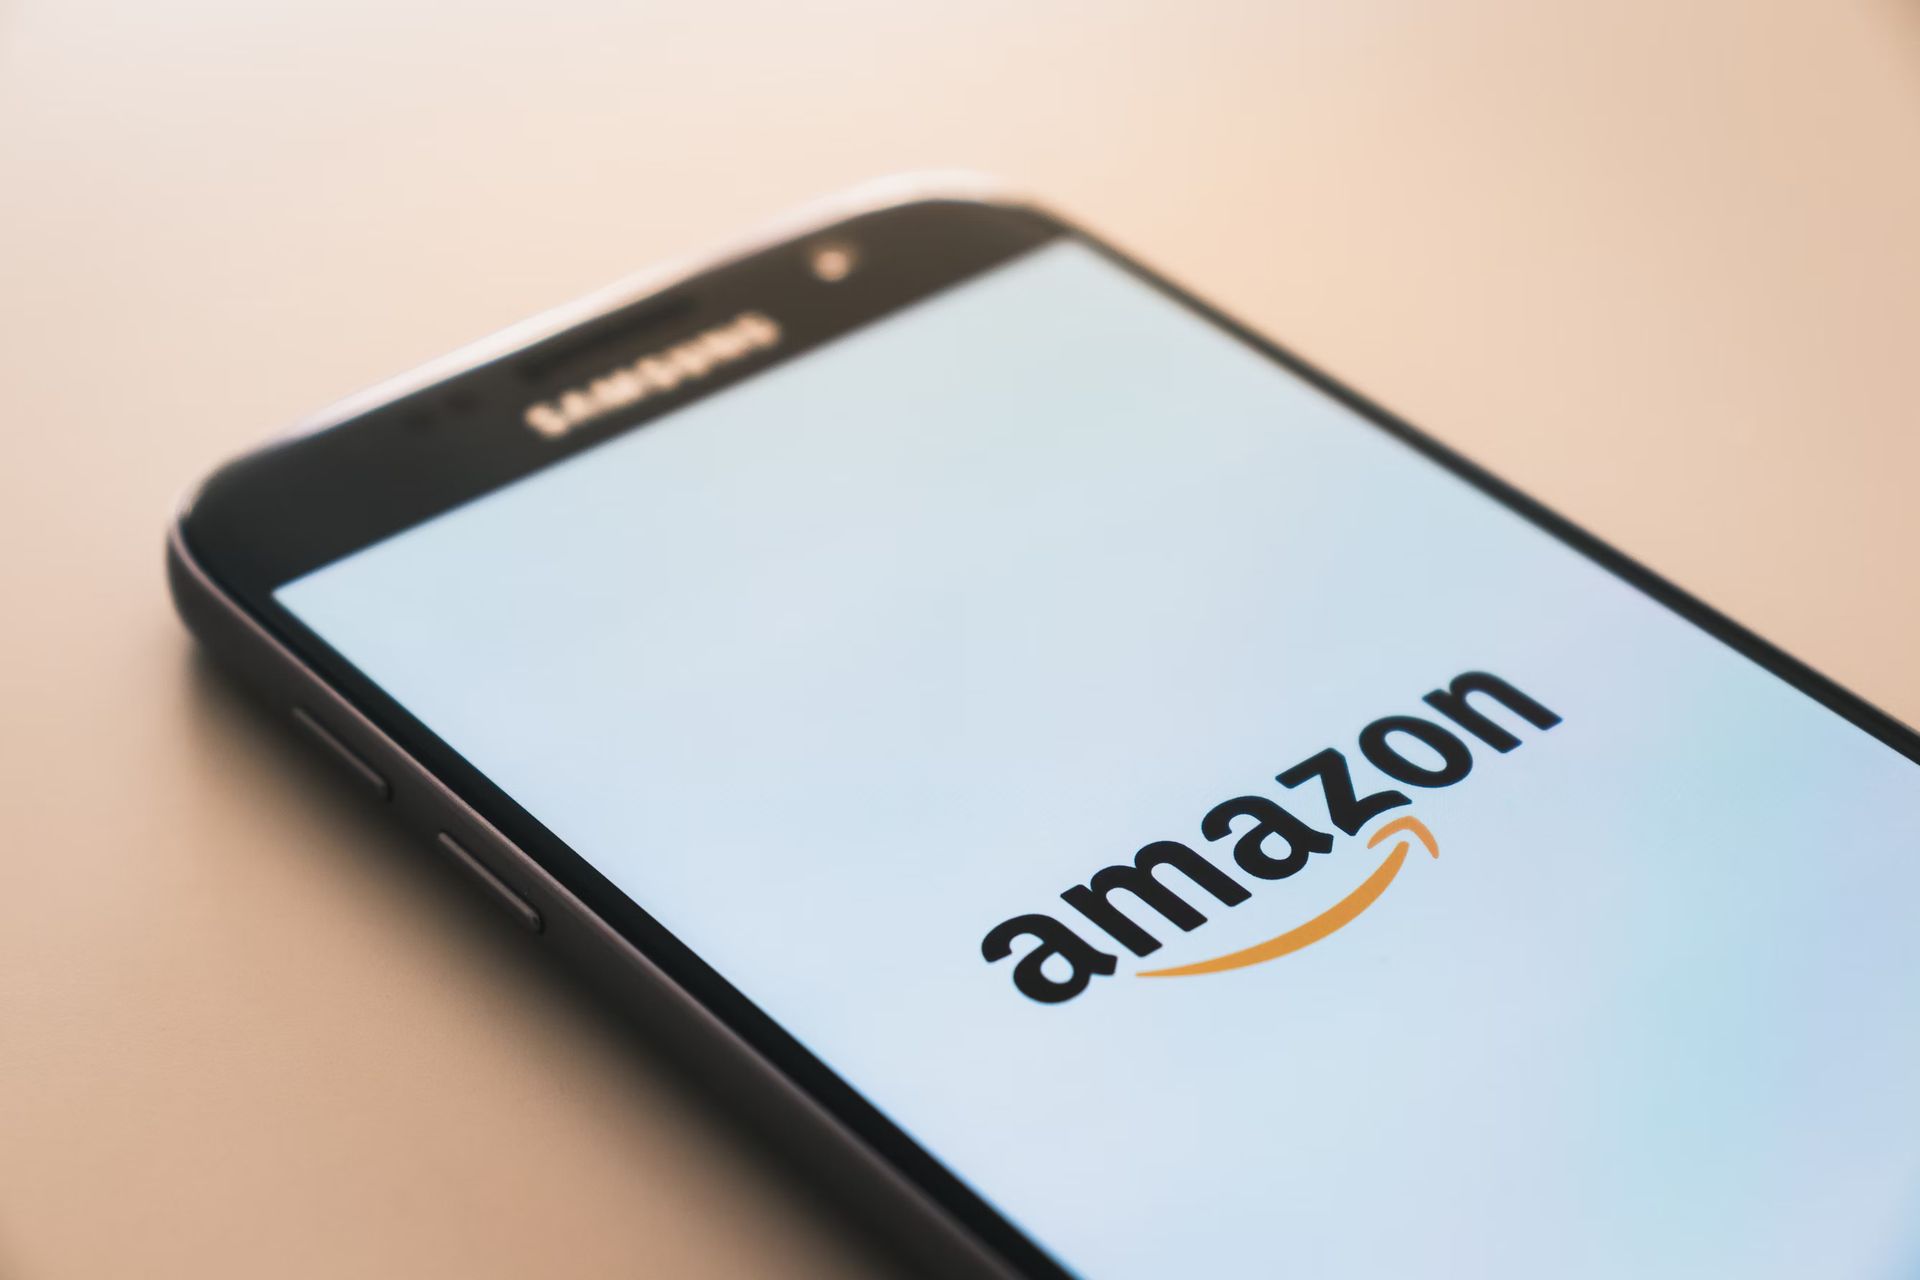 Amazon Buy Box lawsuit